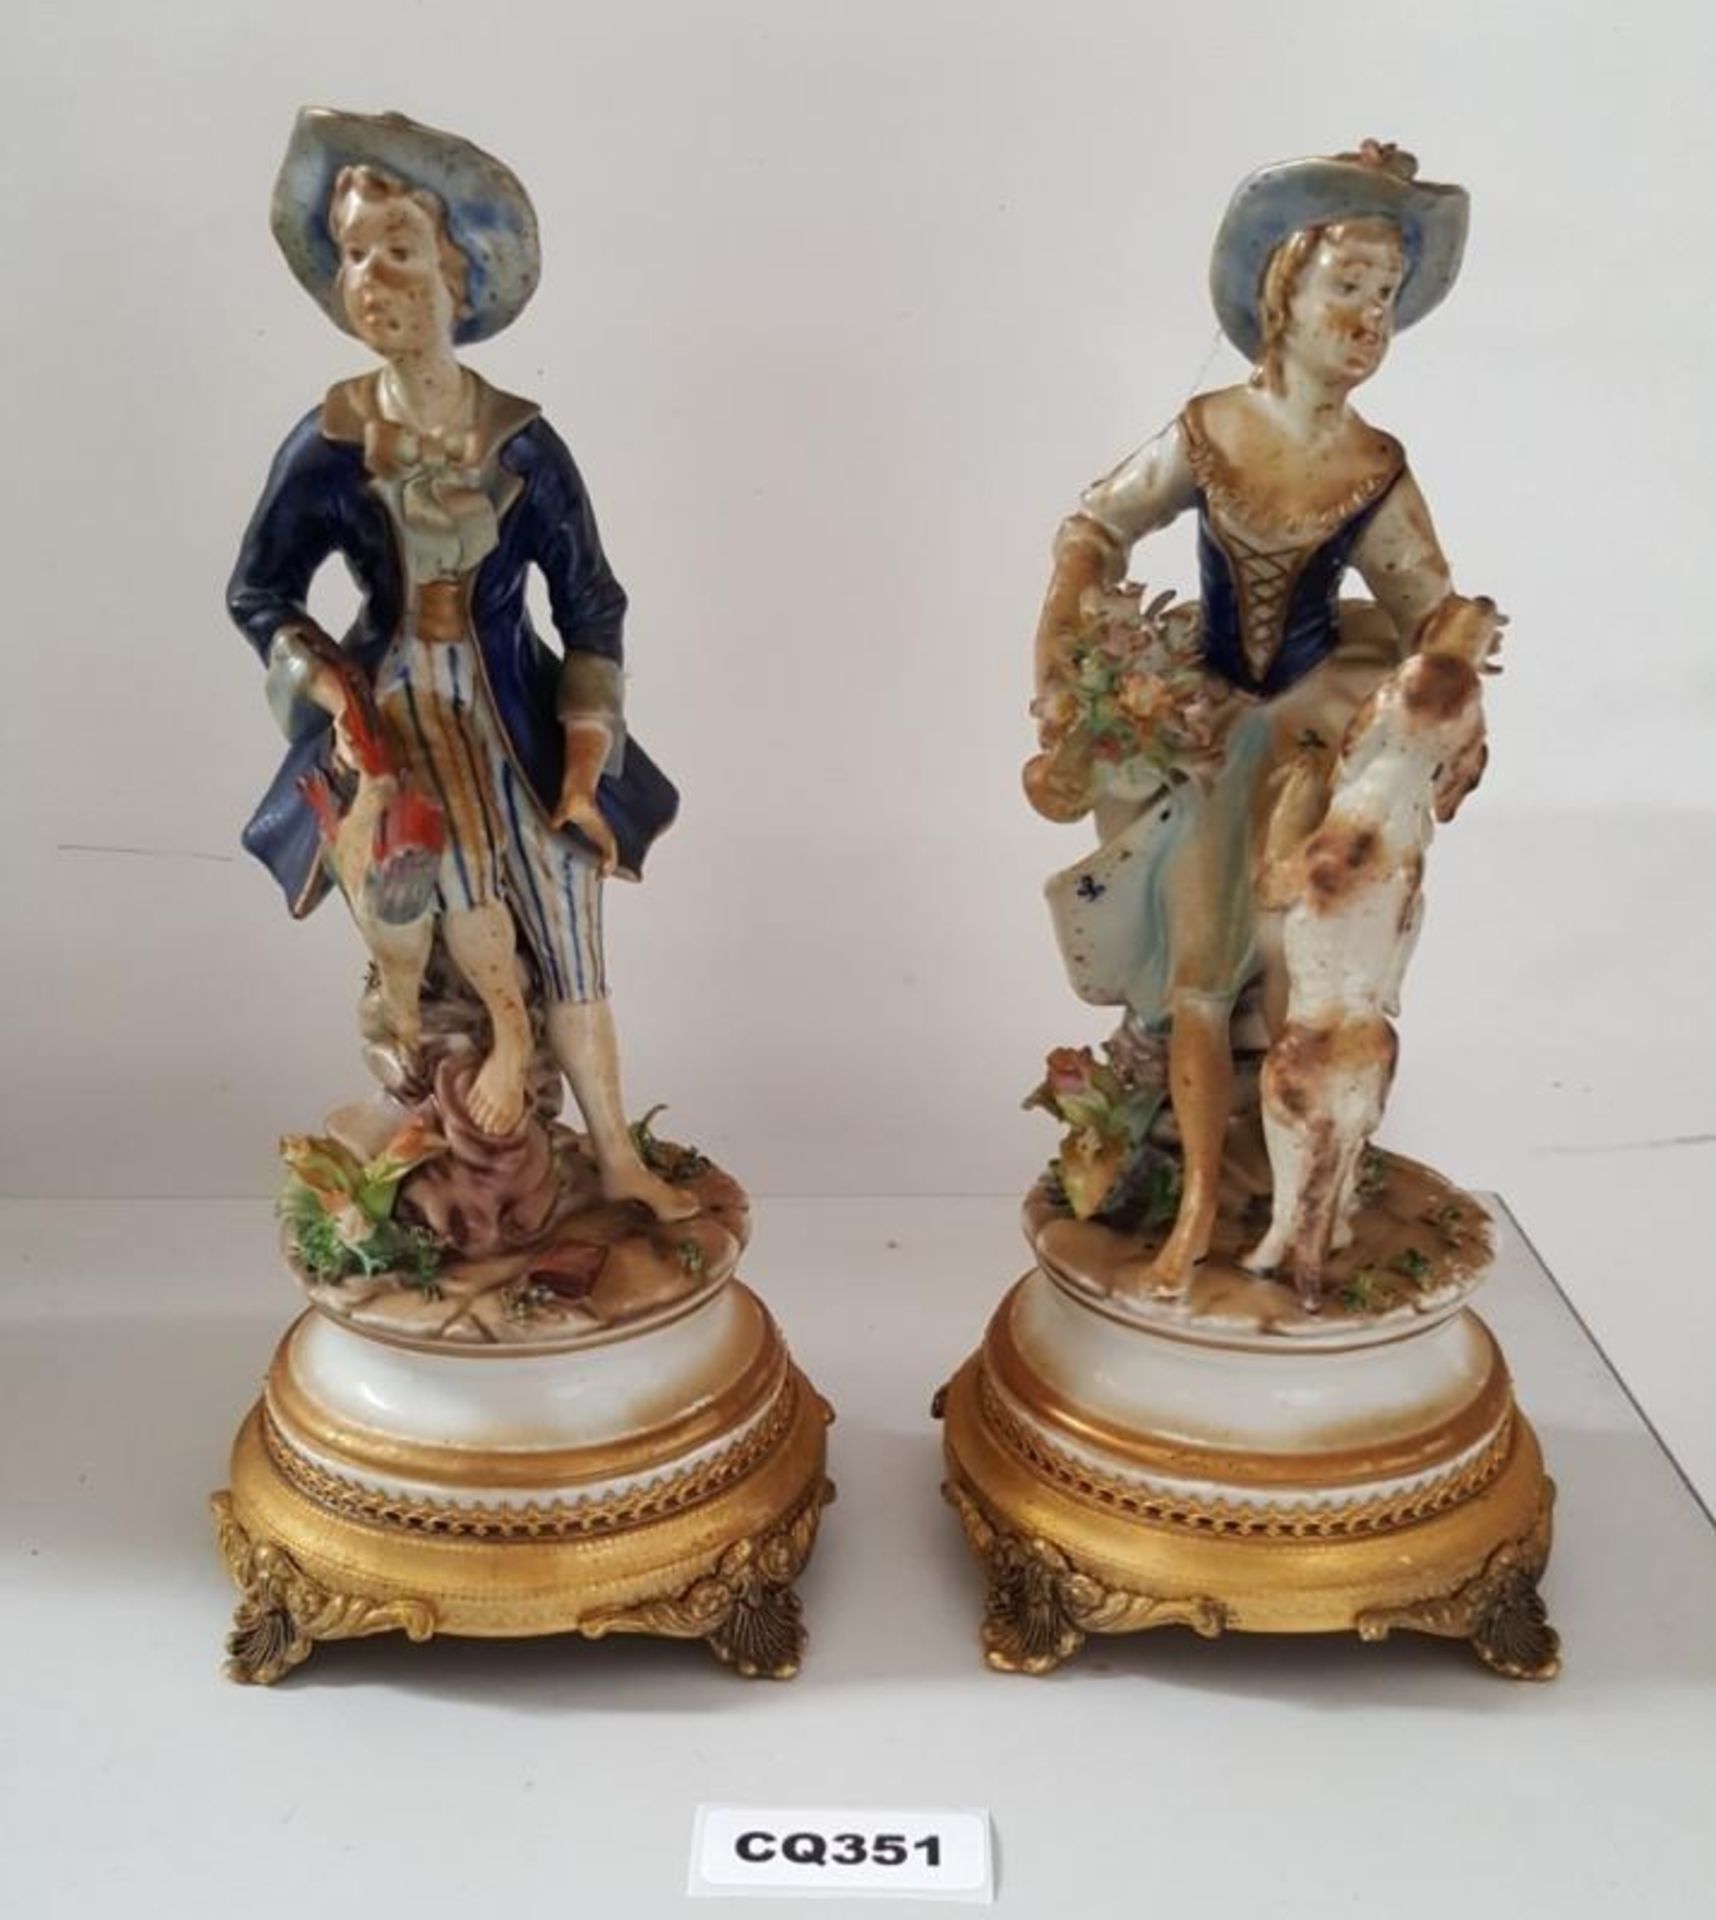 1 x A Pair Of Capodimonte Porcelain Figurines Of A Man & Women - Ref CQ351 E - Dimensions:H27/L11cm